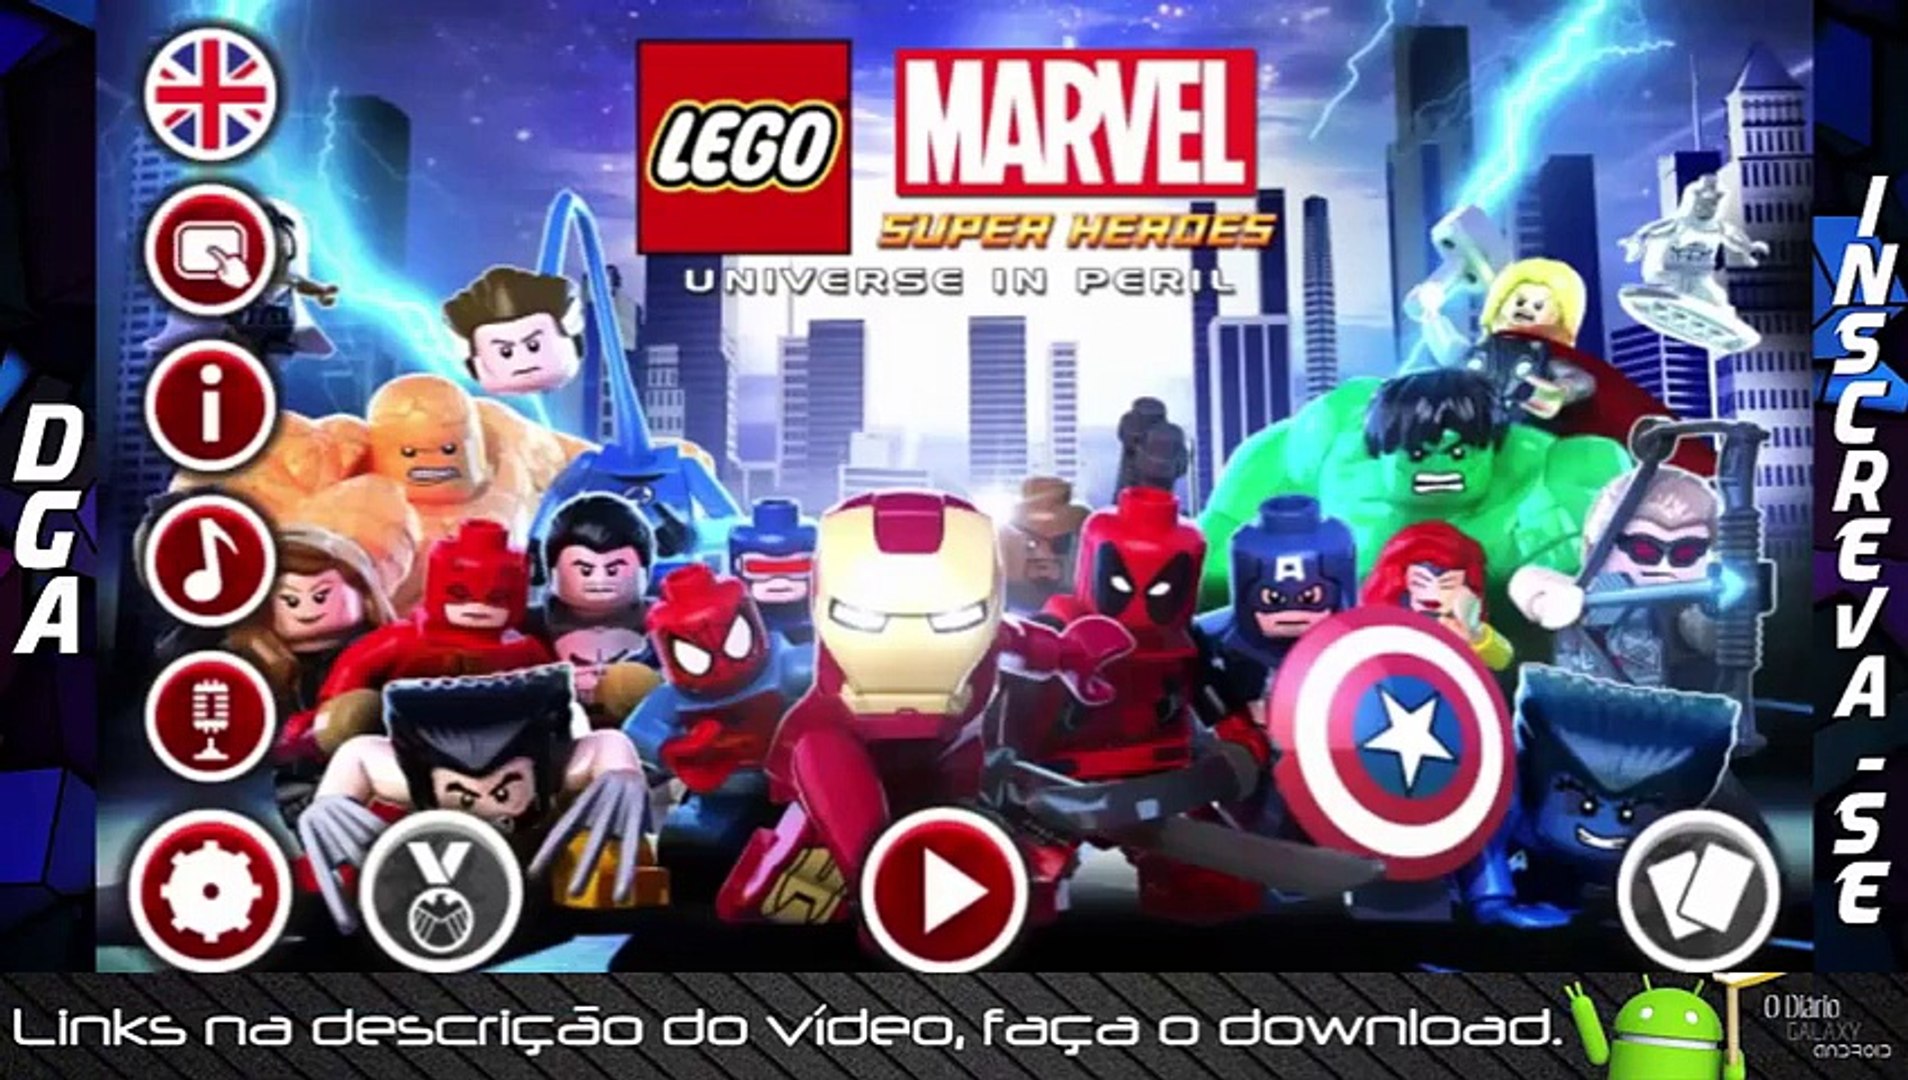 LEGO® MARVEL Super Heroes (com.wb.lego.marvel) 2.0.1.12 APK + Obb